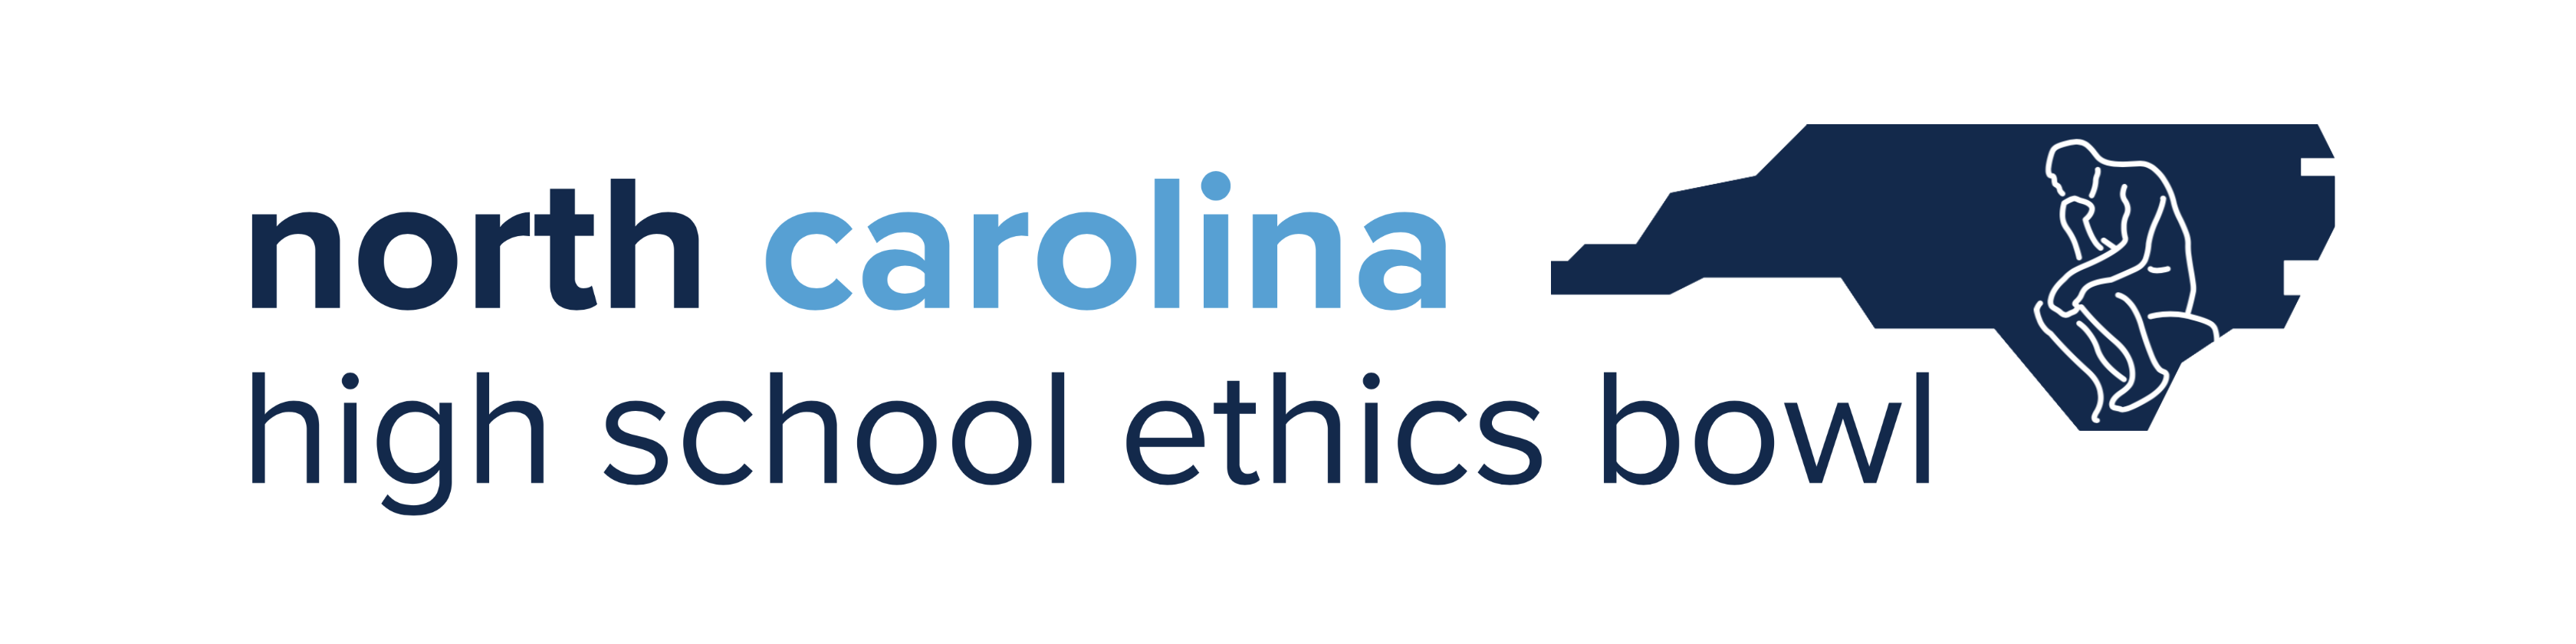 North Carolina High School Ethics Bowl Parr Center for Ethics